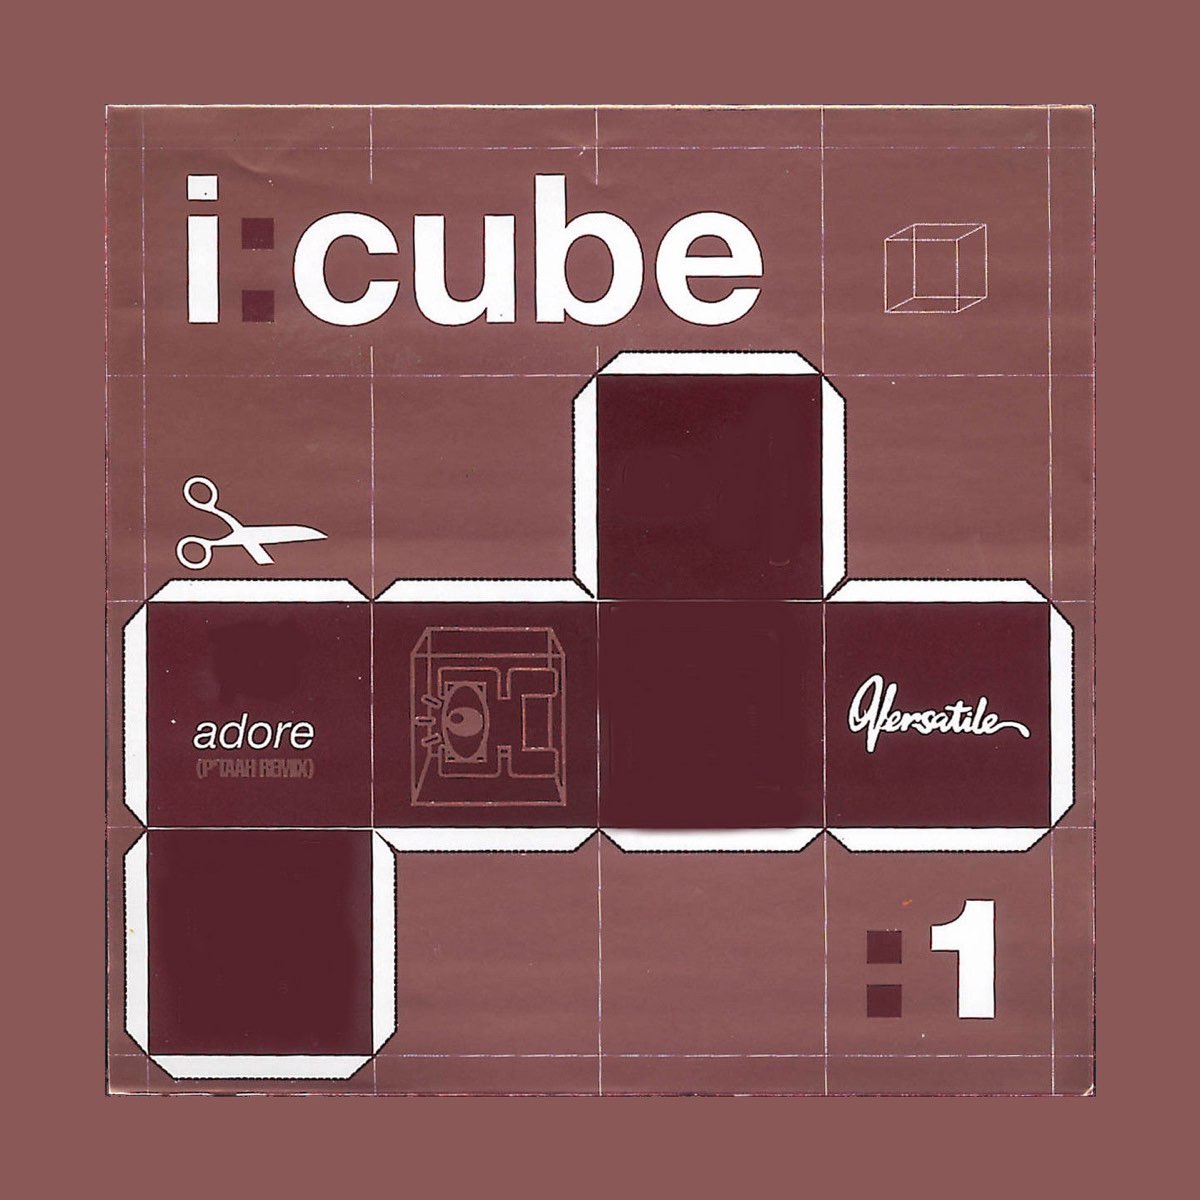 Cube музыка. Альбом adore. Кубиков песни. I Cube. Песня кубики.